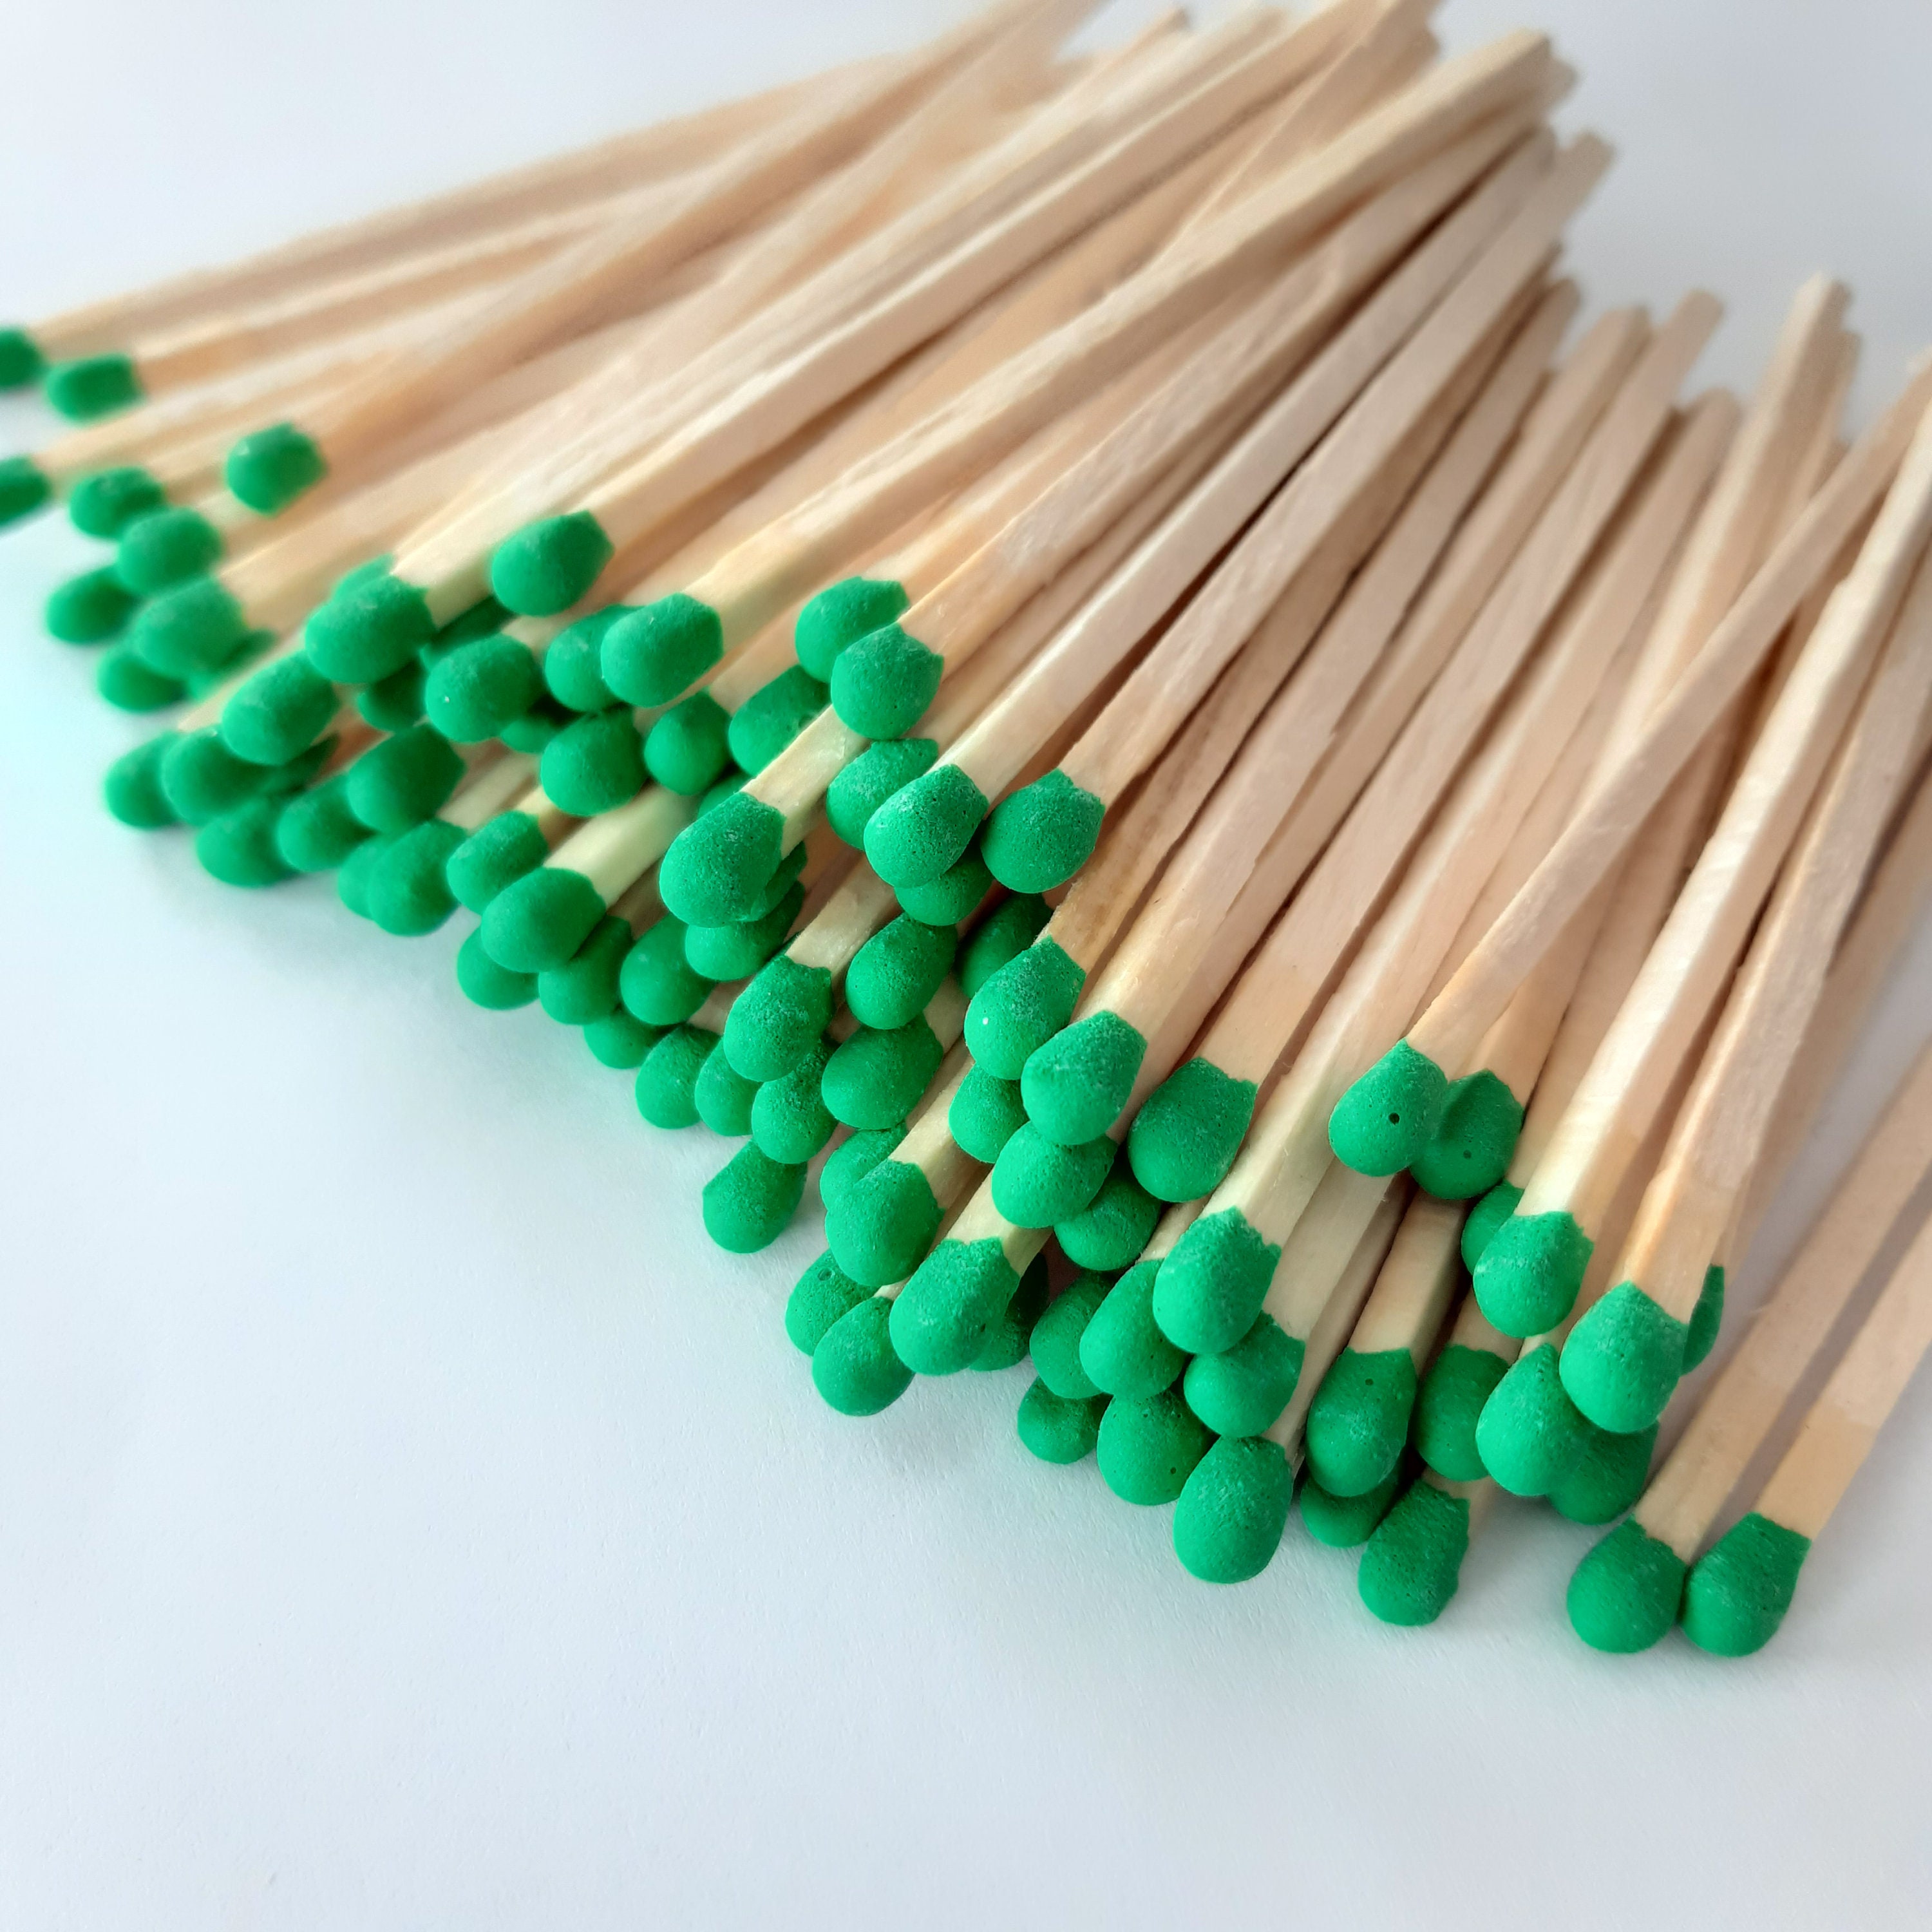  River Birch Emerald Green Tip Decorative Matches, 200+ Small  Premium Wooden Safety Matches, Replacement Refill Matchsticks, Lighting